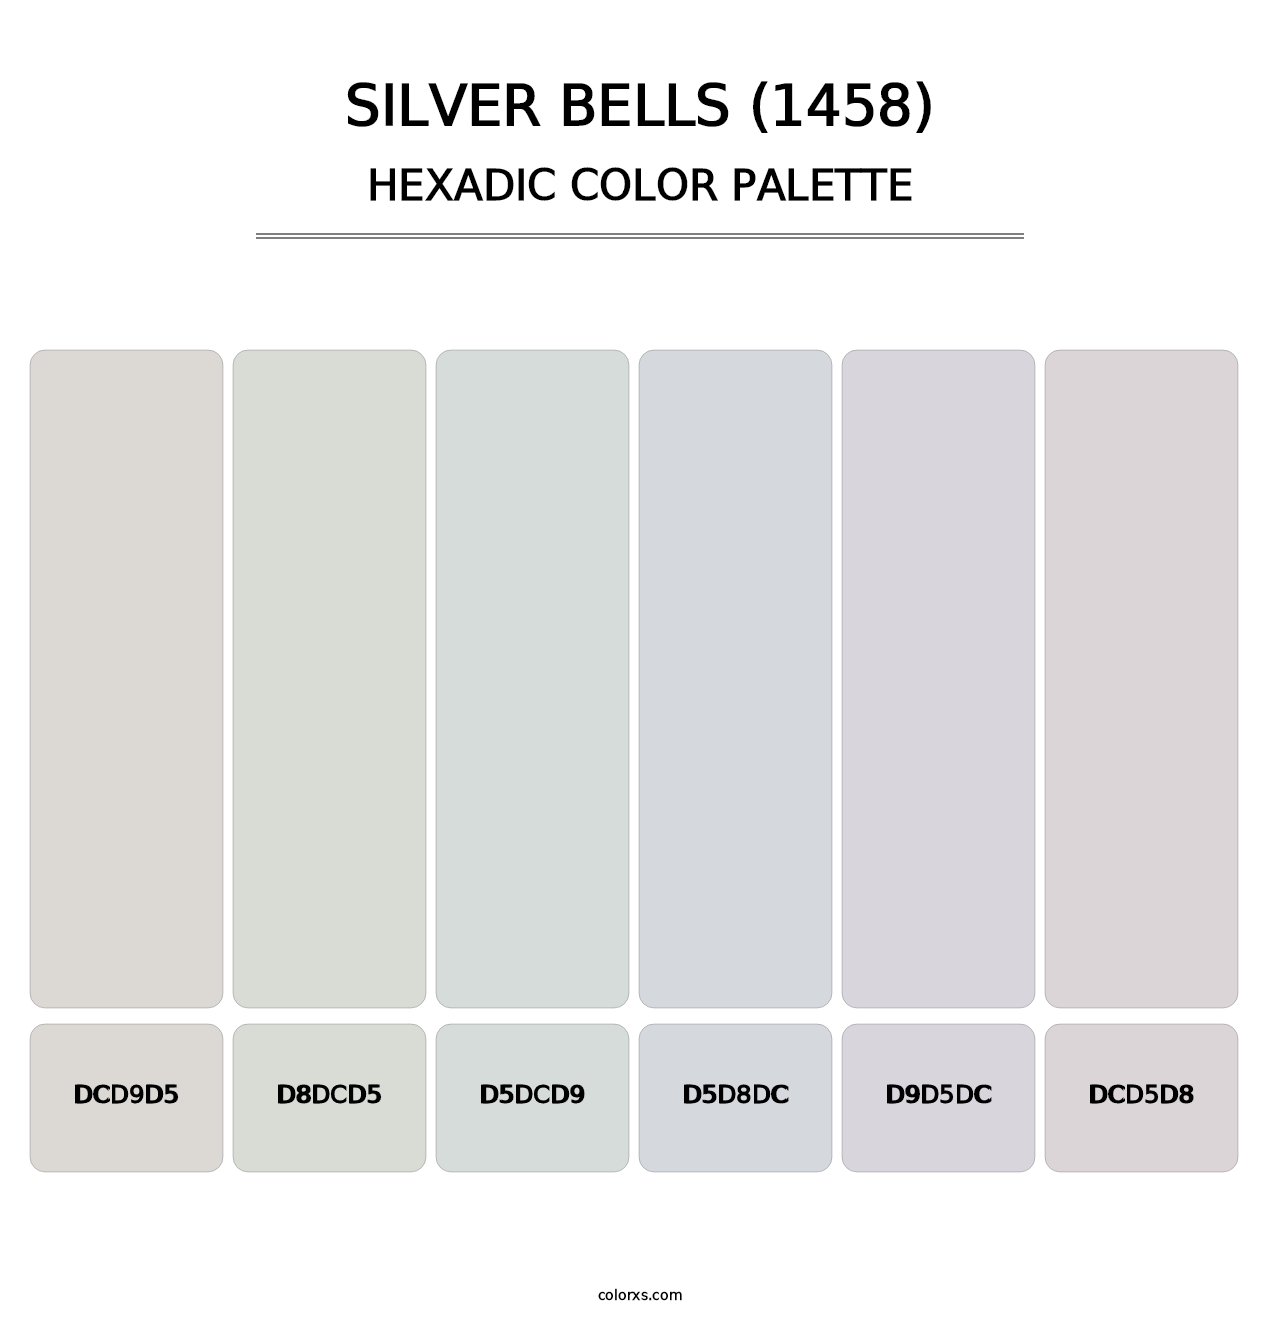 Silver Bells (1458) - Hexadic Color Palette